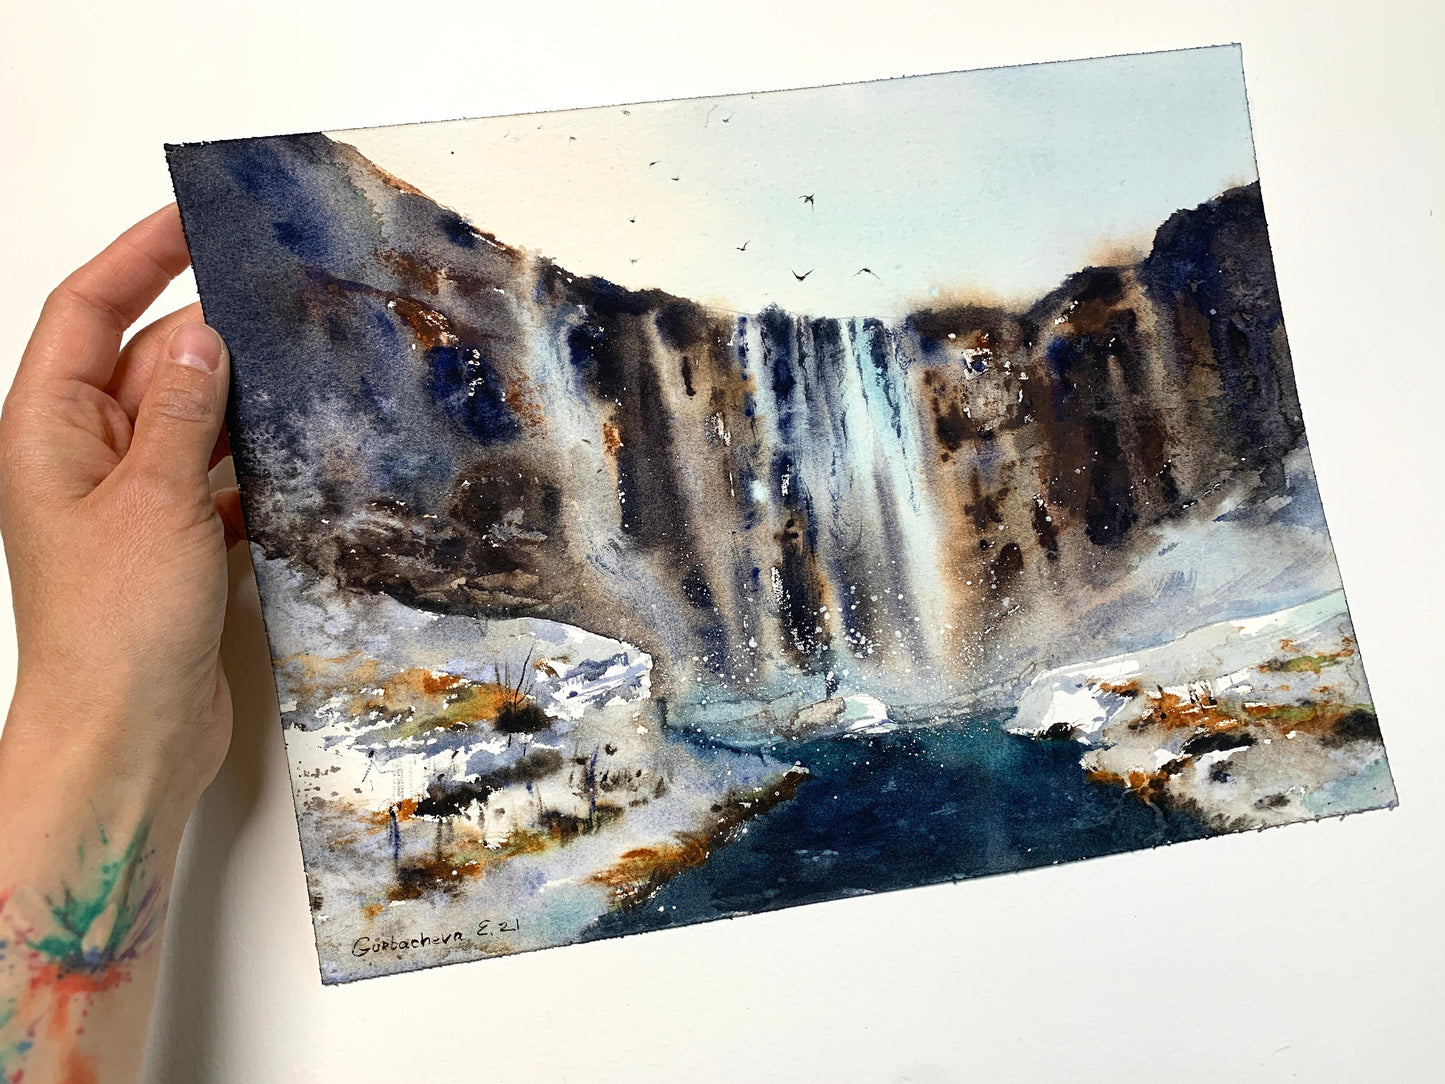 Waterfall Watercolor Original Painting, Nature Art, Icelandic Landscape Artwork, Nordic Wall Decor, Gift For Traveler